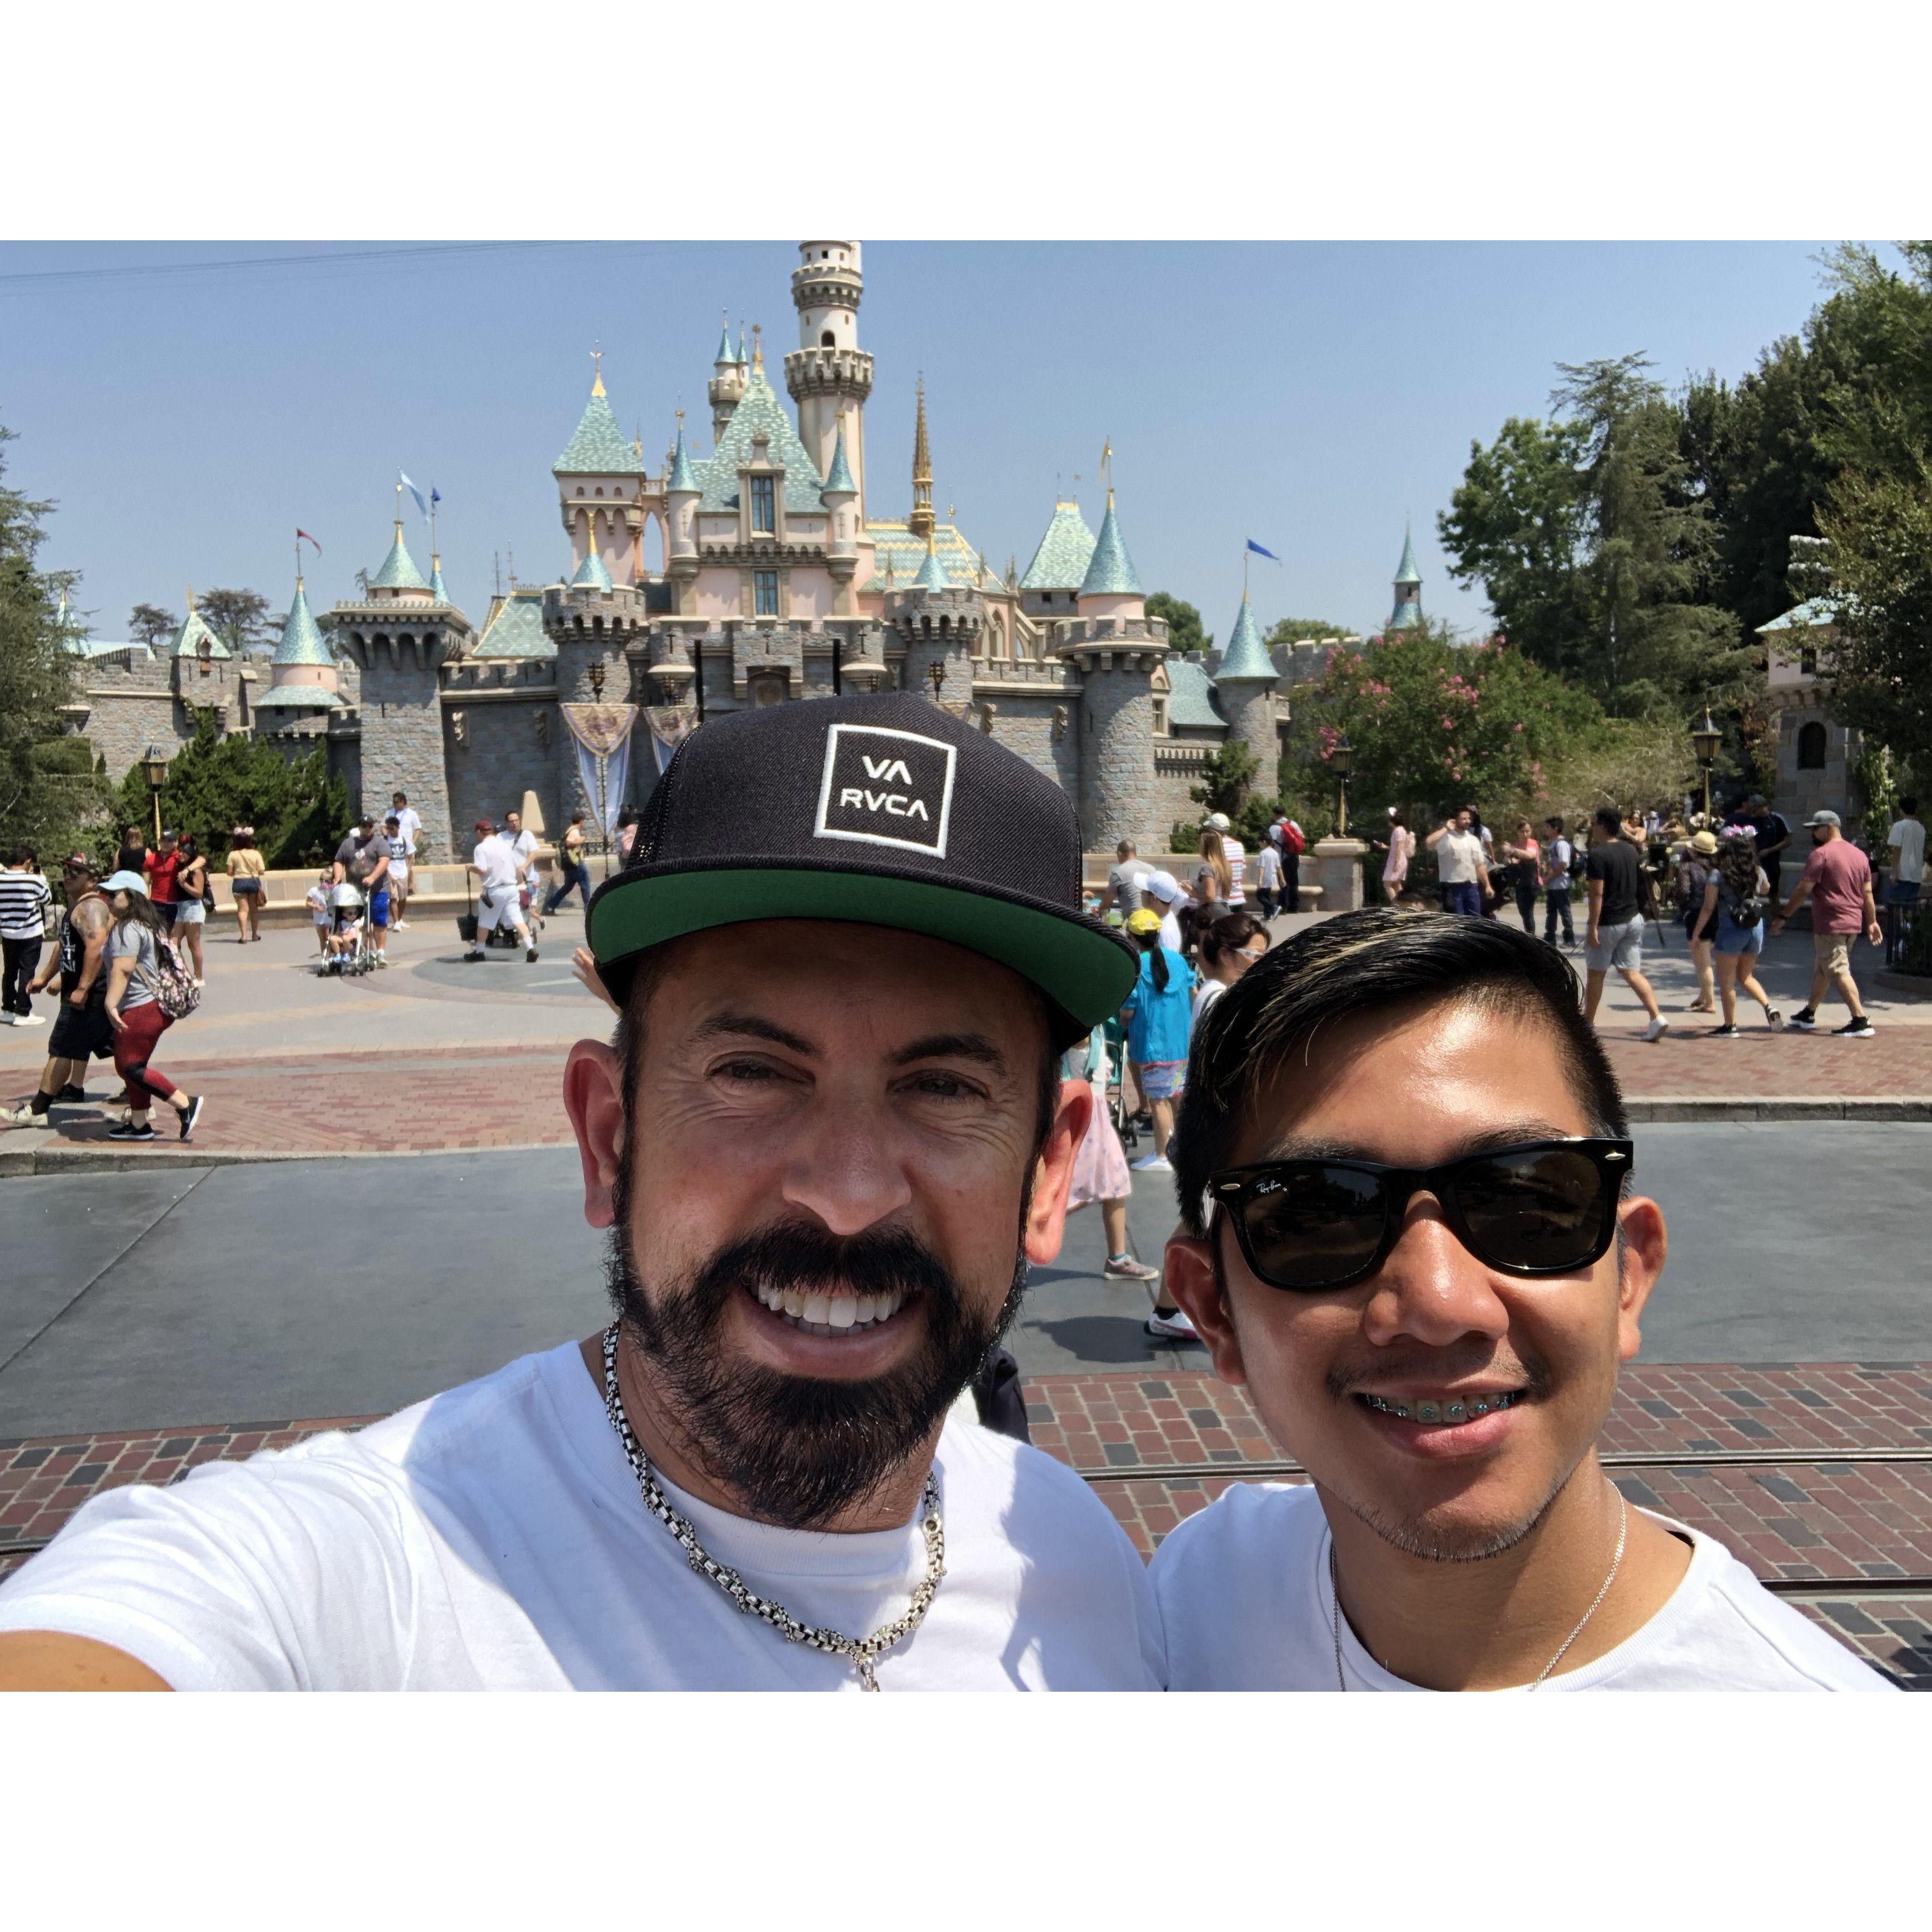 At Disneyland 2017